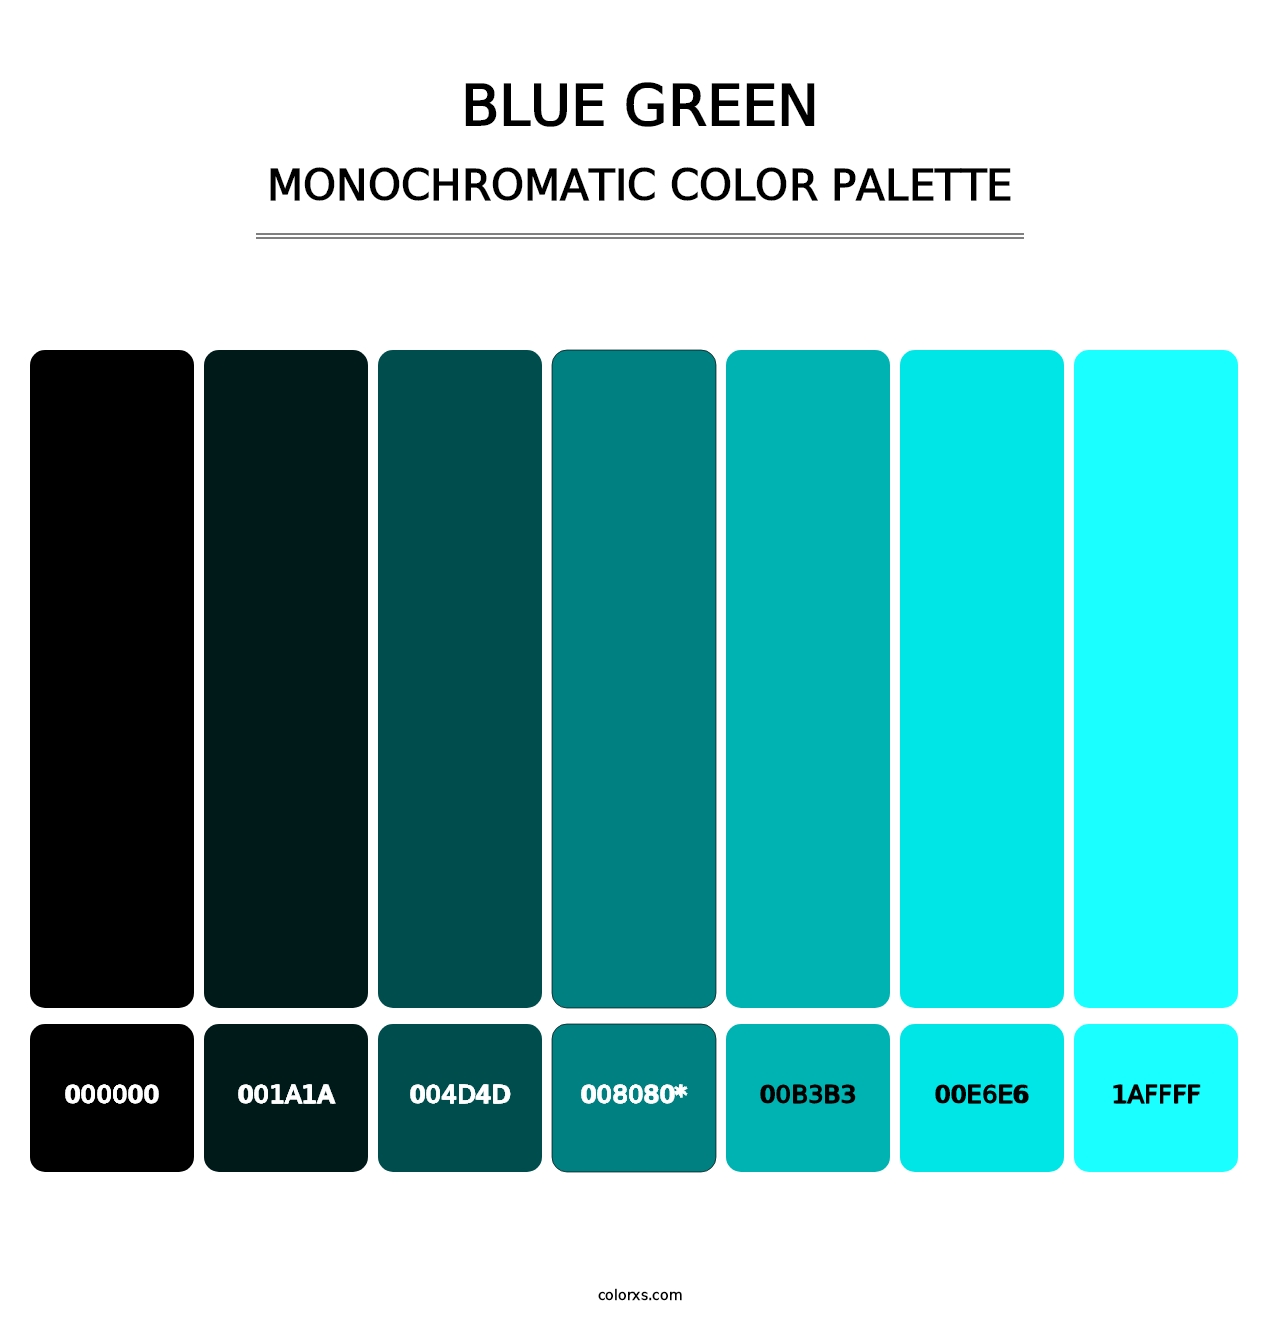 Blue Green - Monochromatic Color Palette